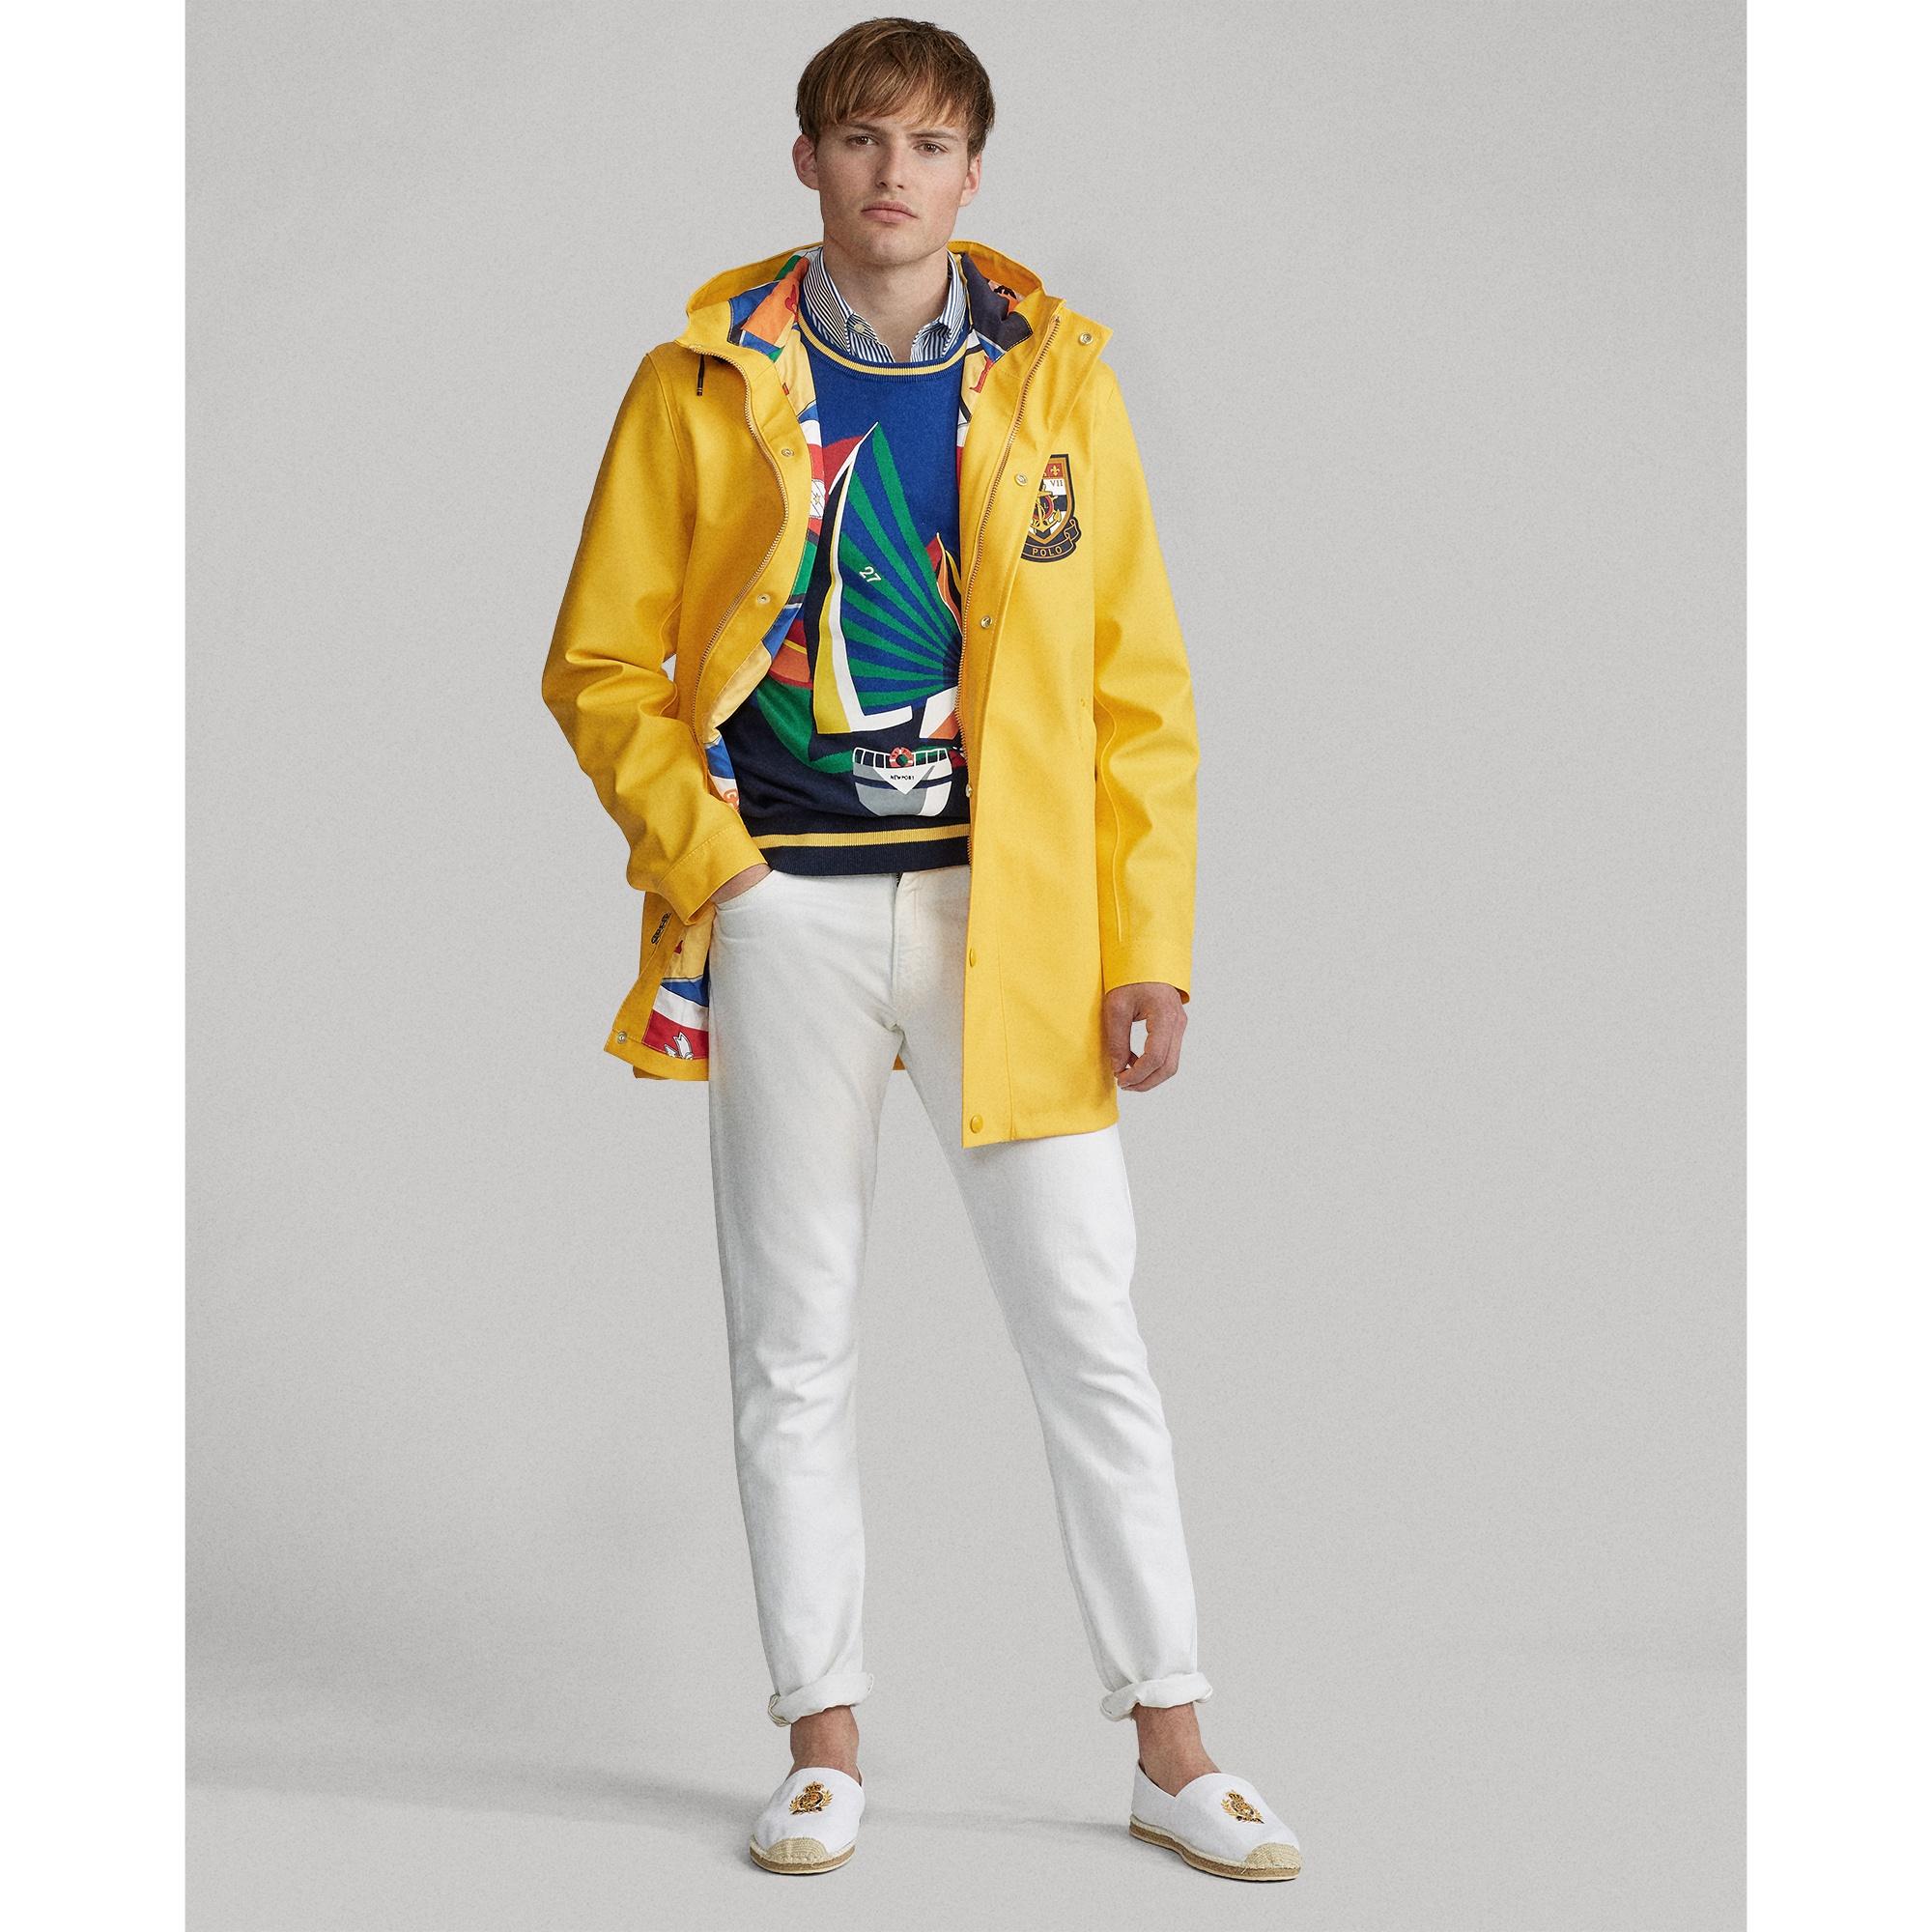 Polo Ralph Lauren Rubberized Cotton Raincoat in Yellow for Men - Lyst